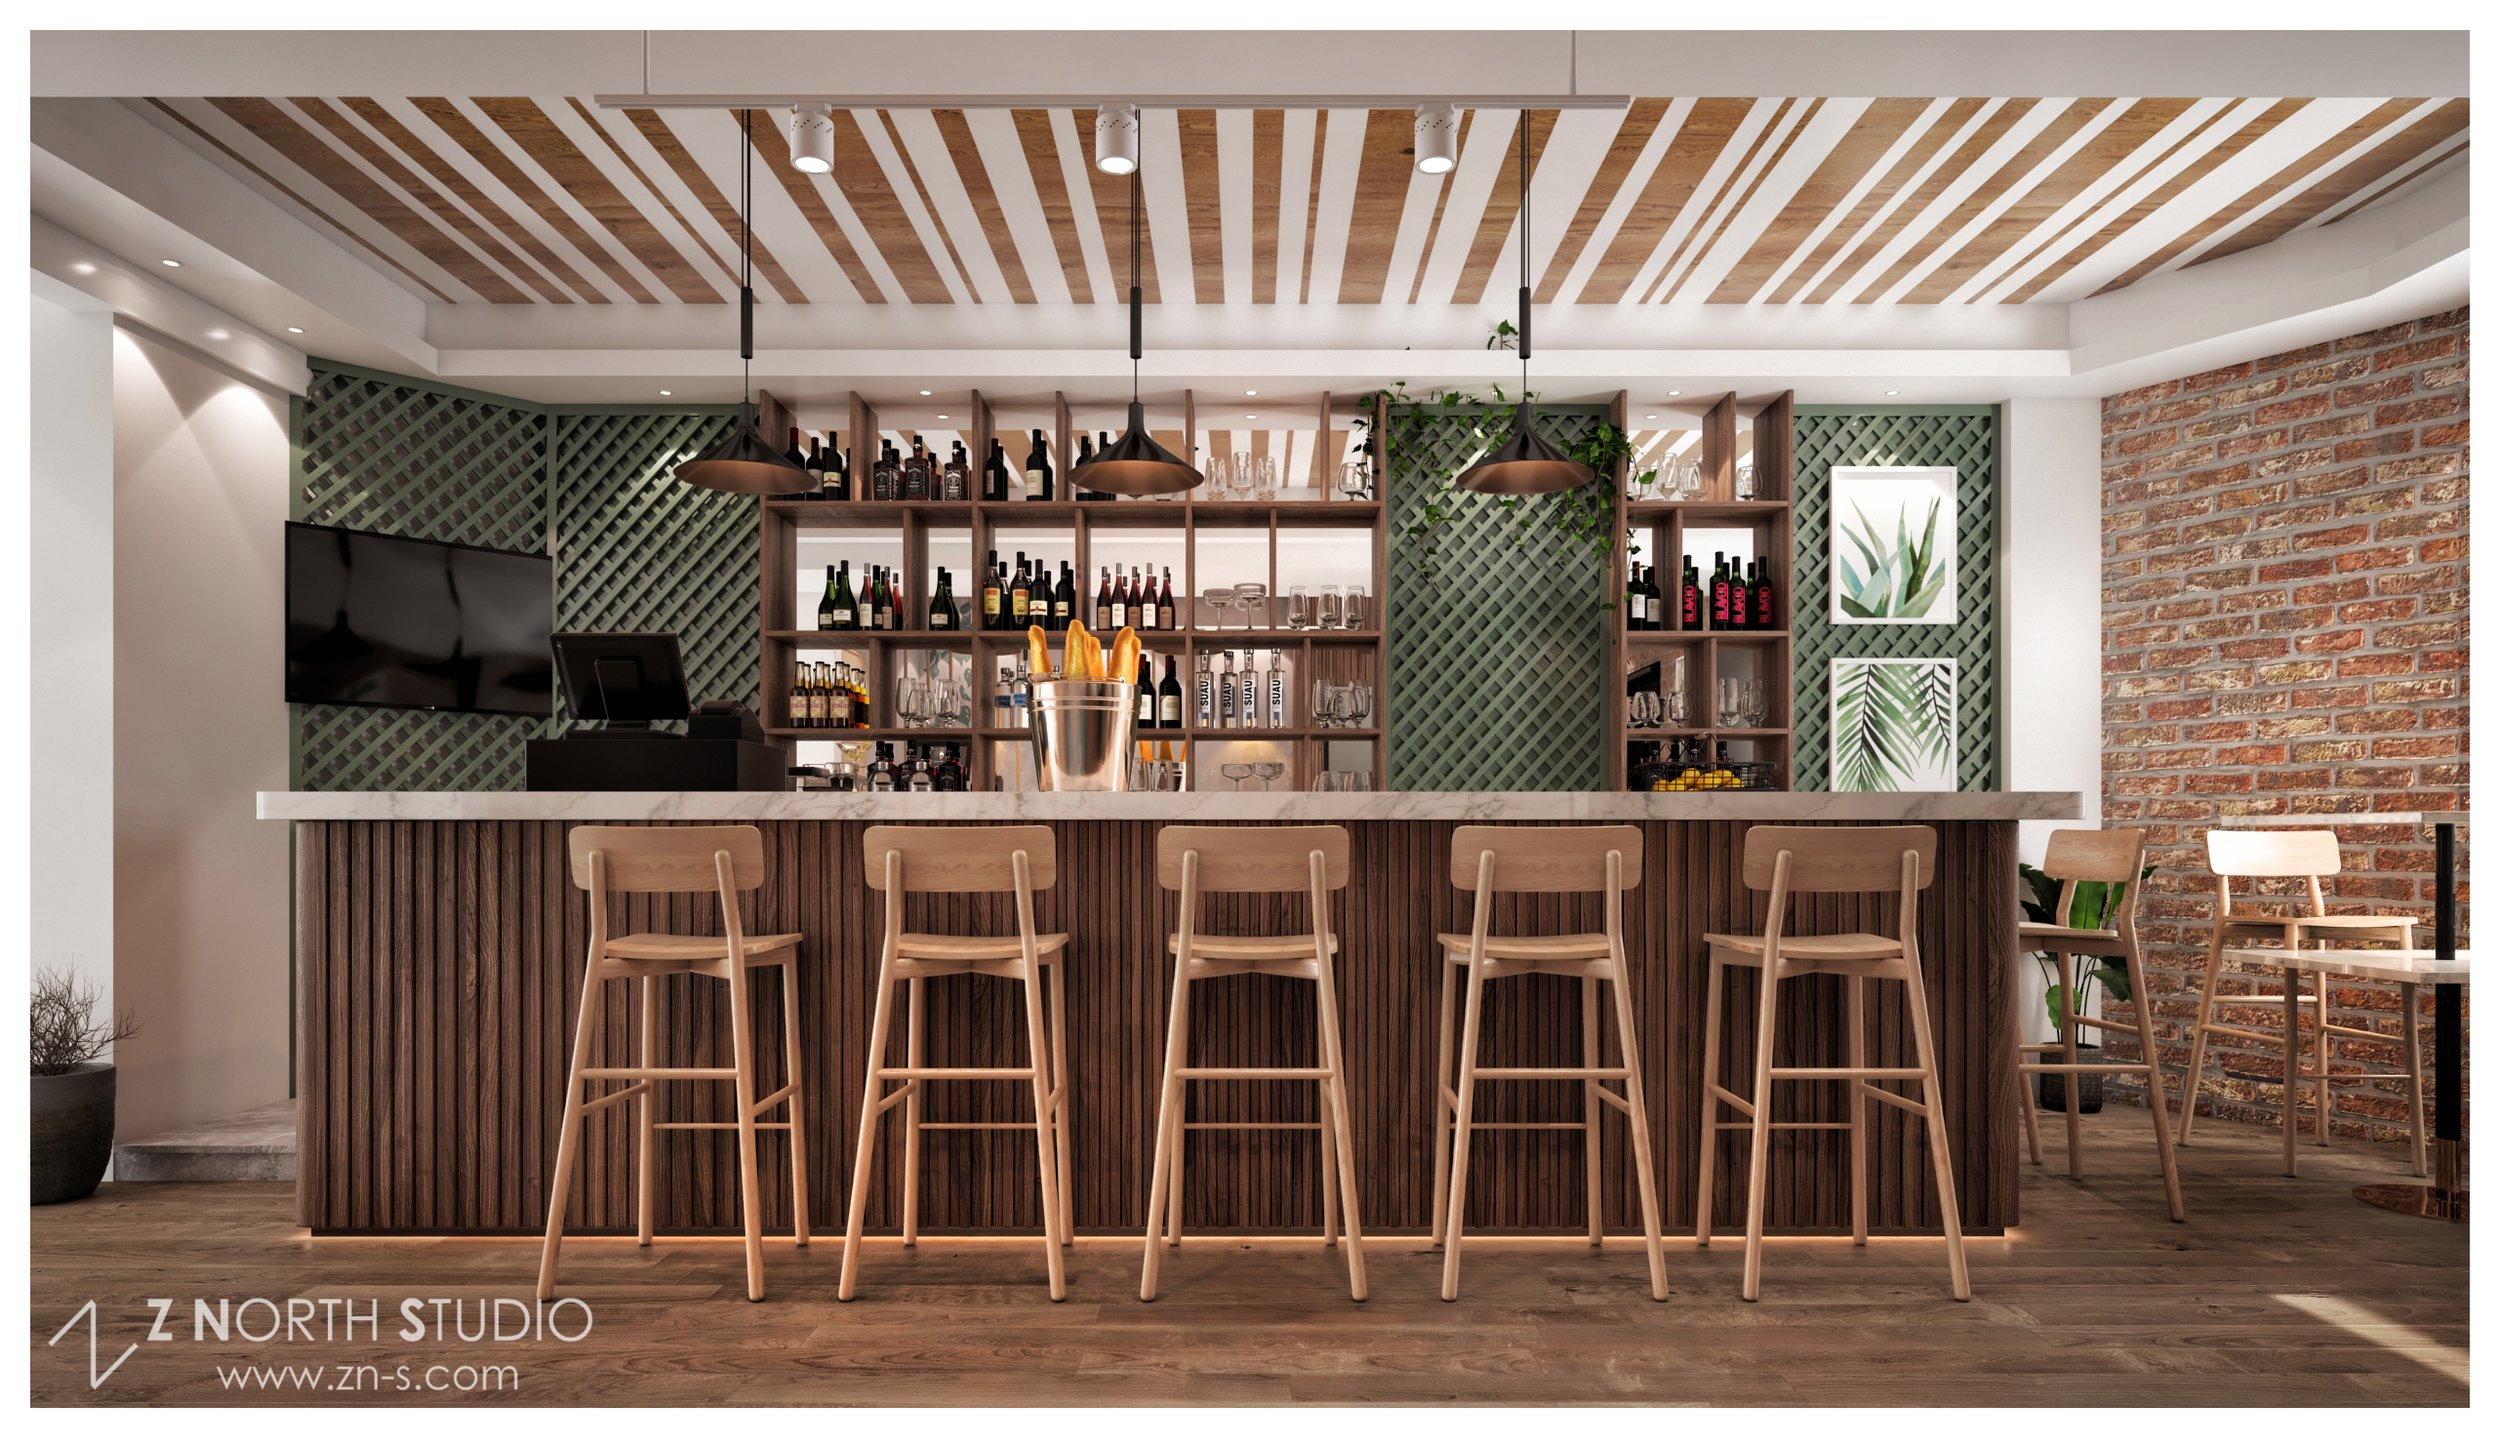 Resturant Design Omaris Music Bar & Agave Lounge Z North Studio 1st (3r.jpg